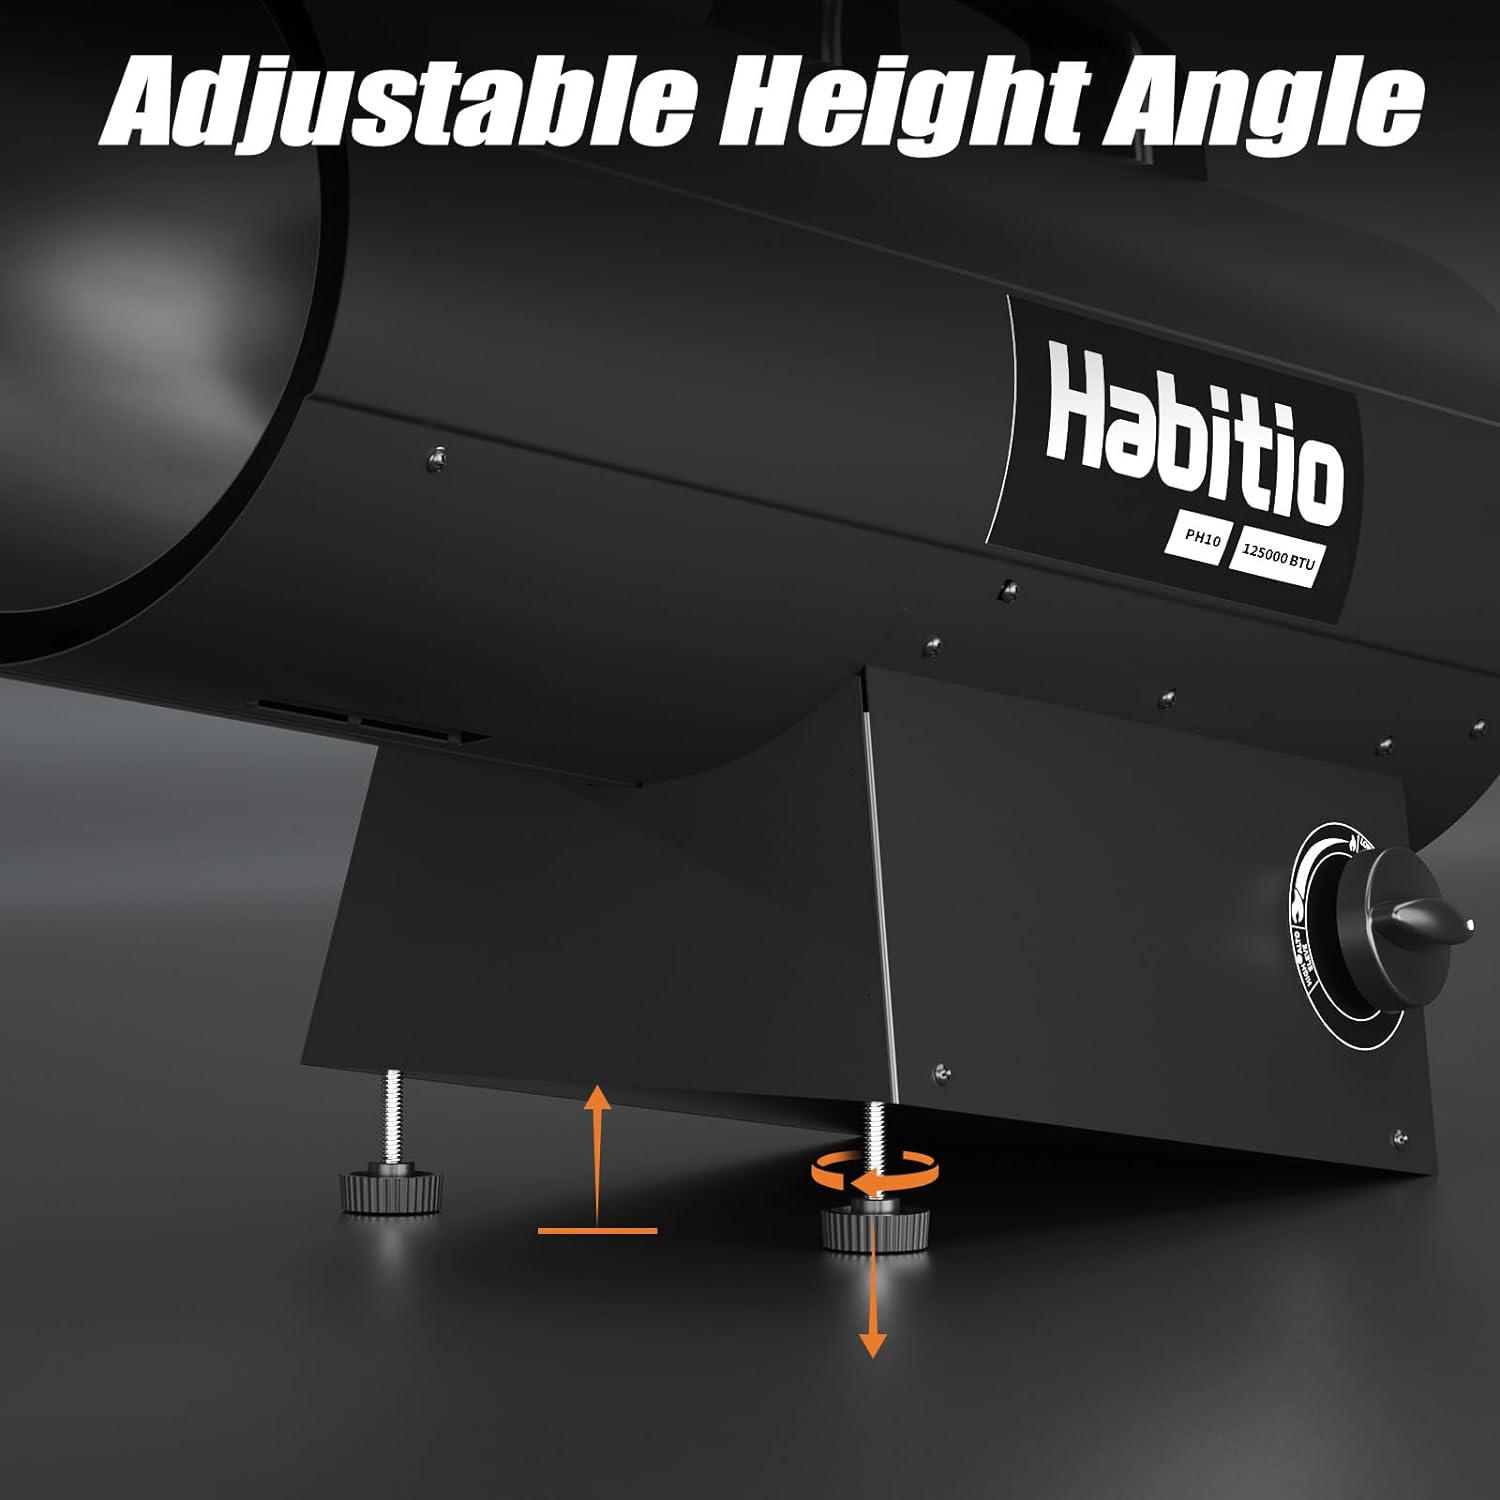 Habitio 125,000 BTU Forced Air Propane Heater Review